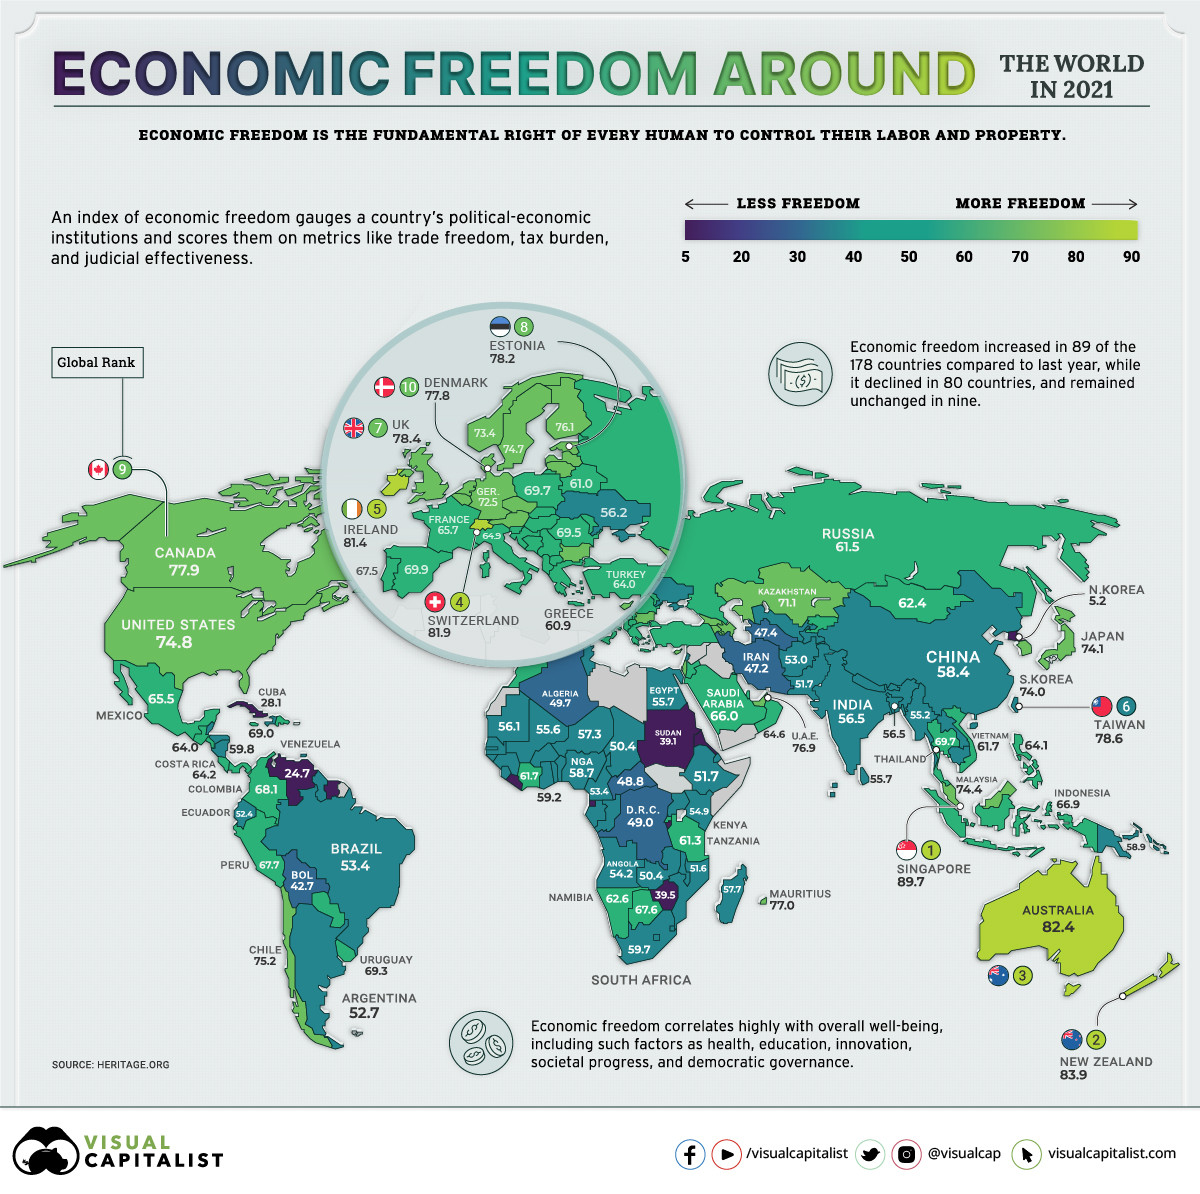 a visual representation of economic freedom